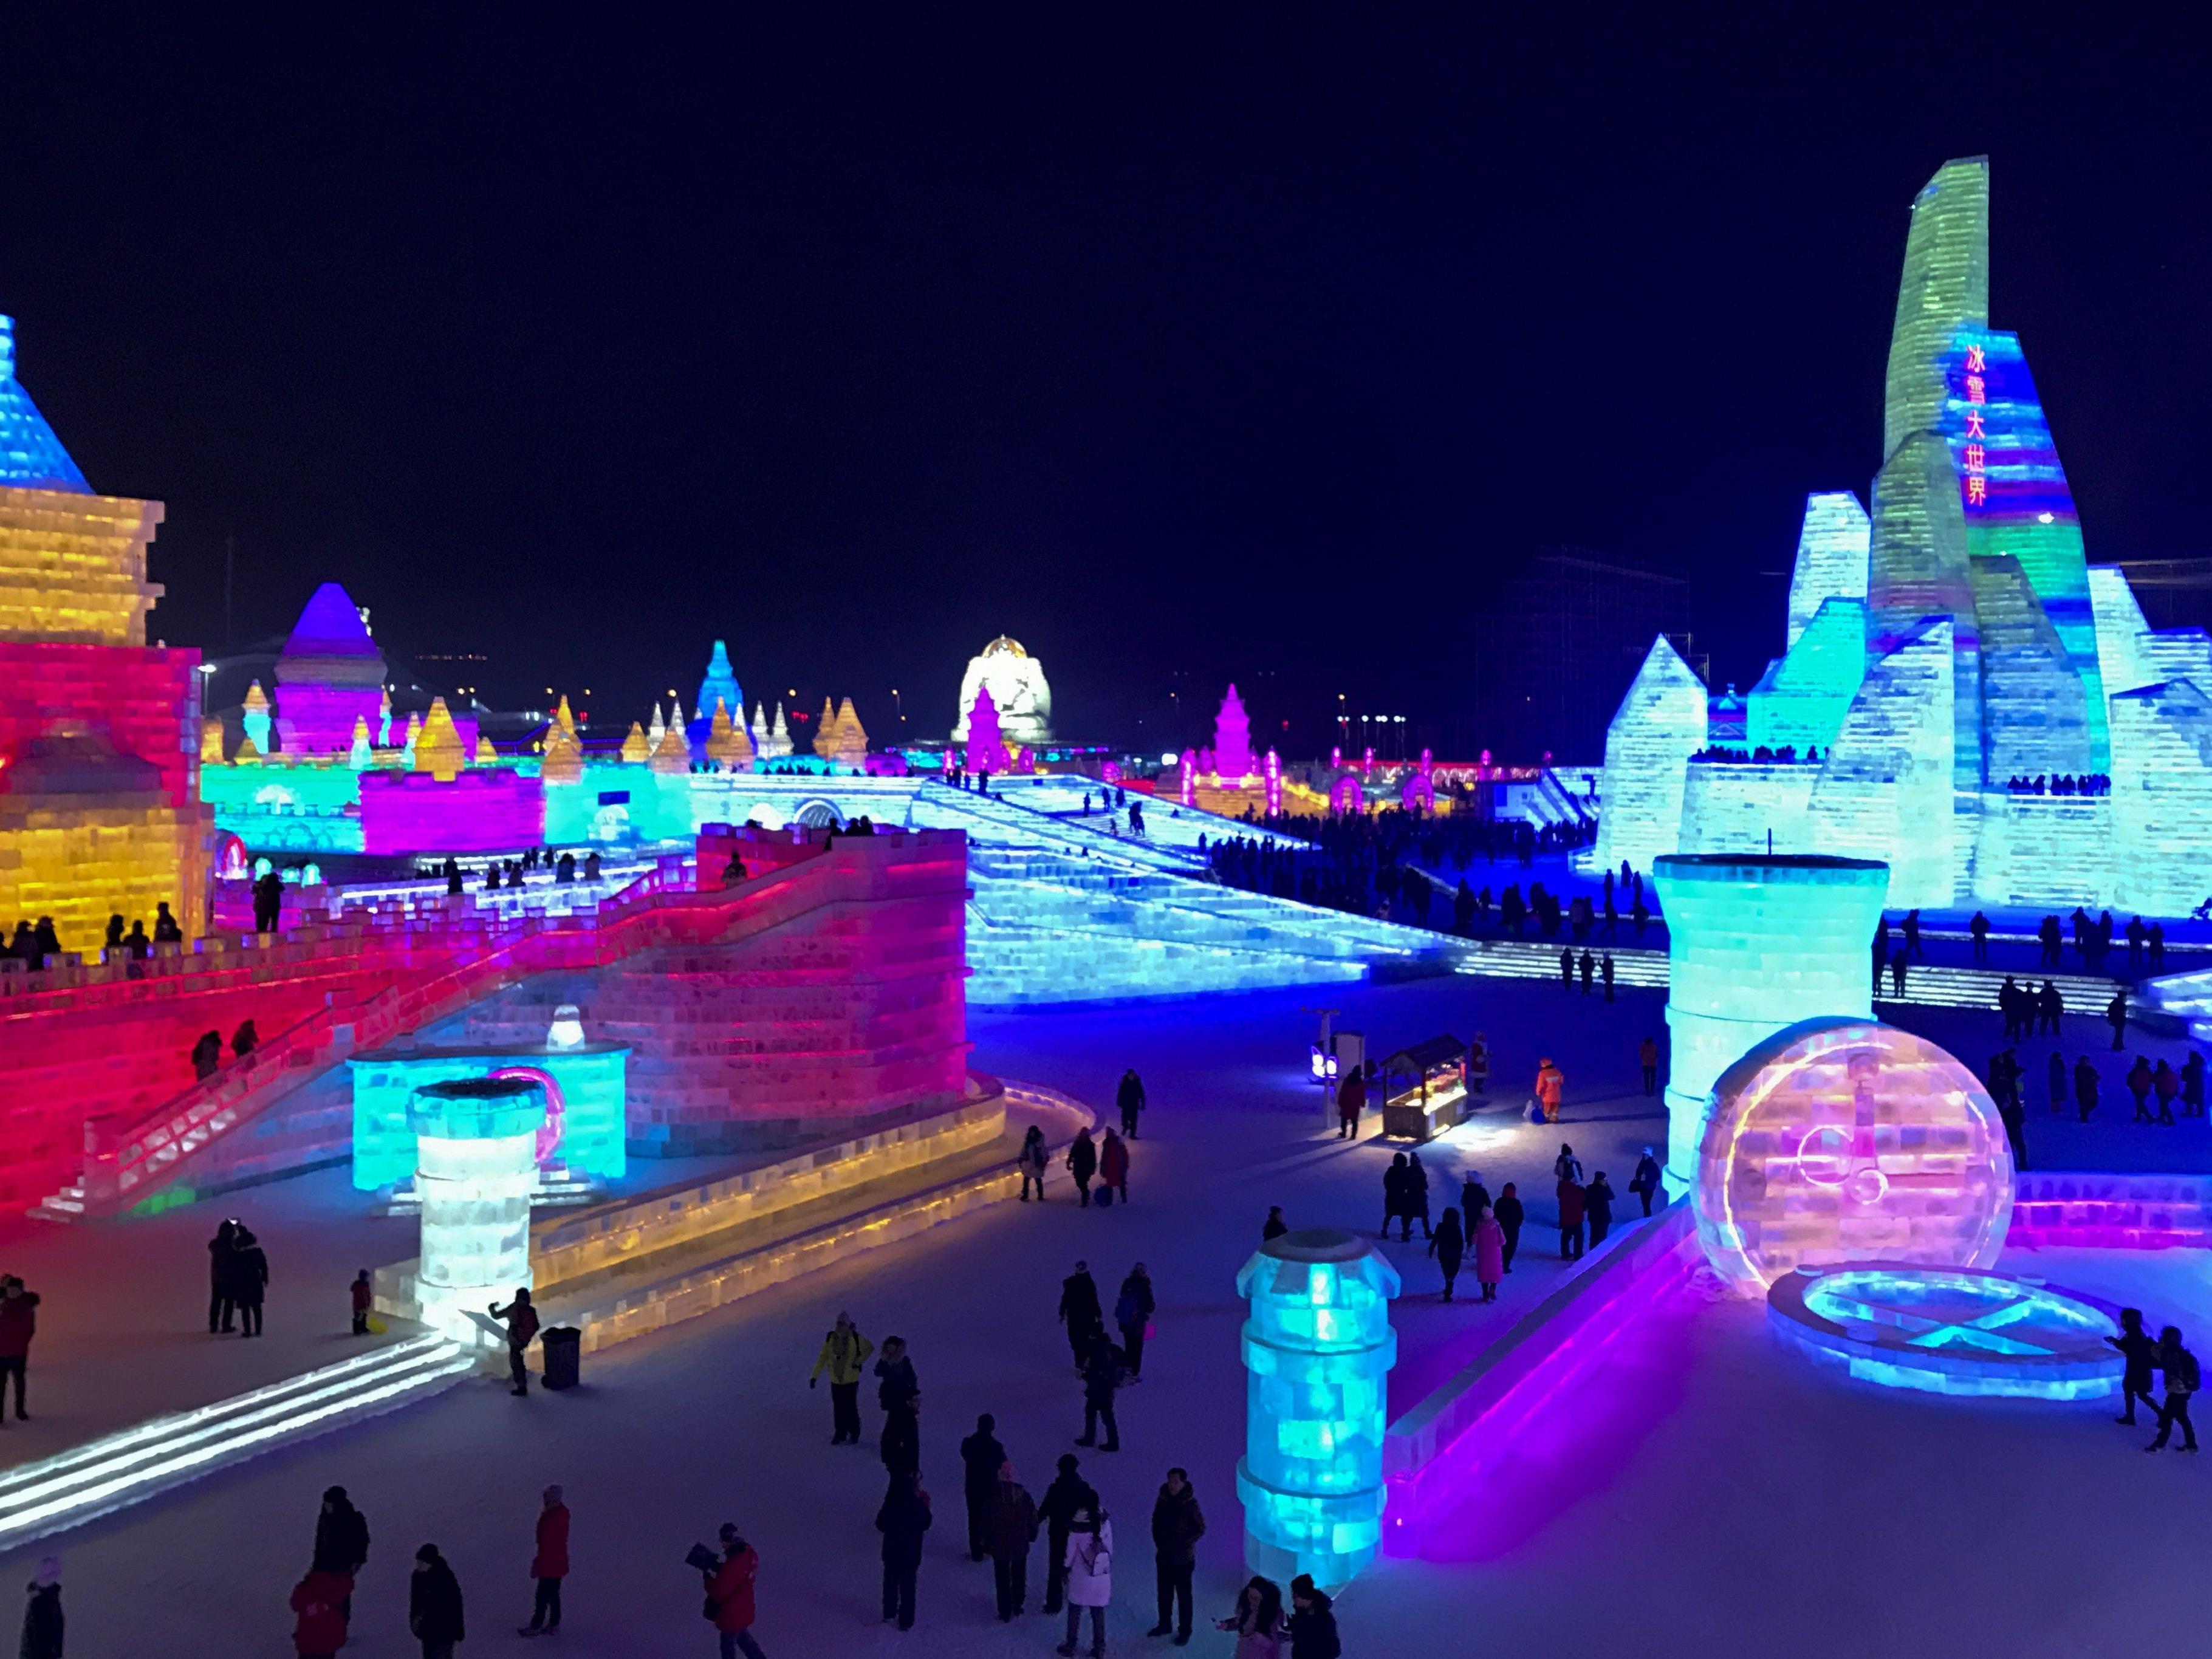 Spektakuläres Eisfestival in China